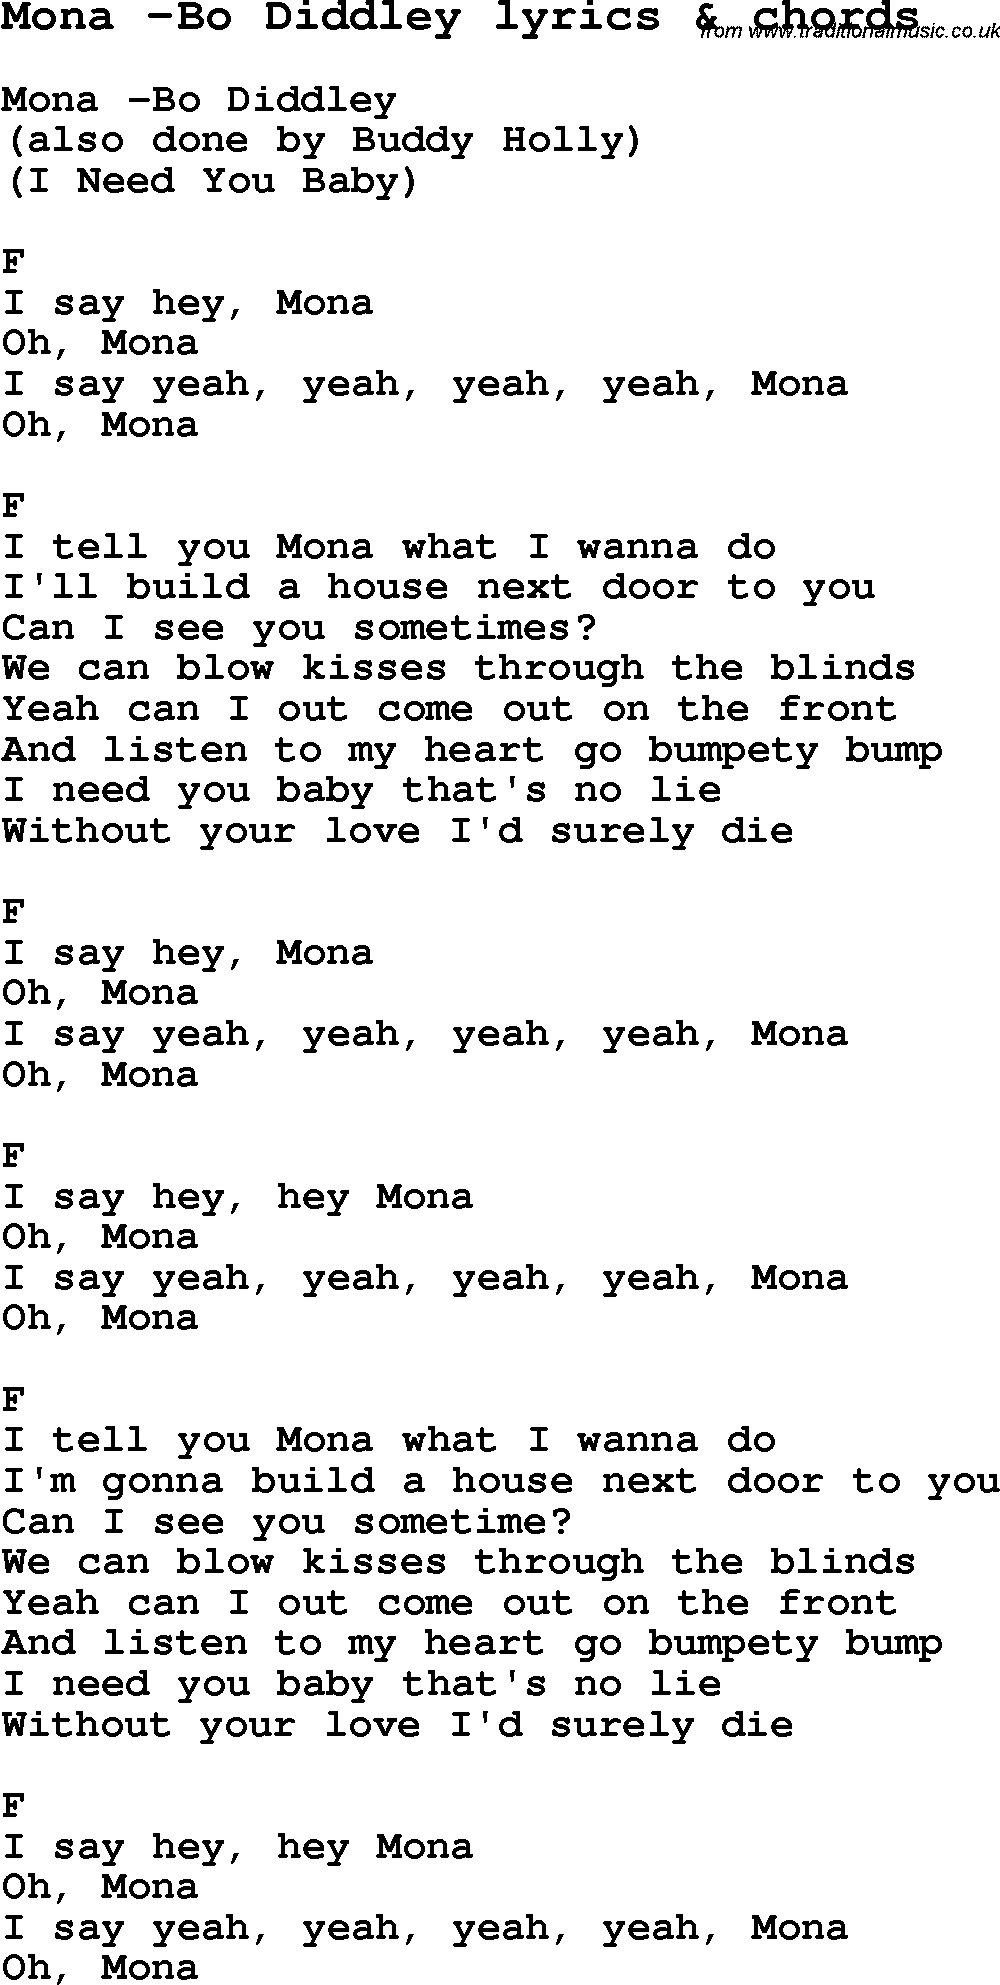 Love Song Lyrics for: Mona -Bo Diddley with chords for Ukulele, Guitar Banjo etc.